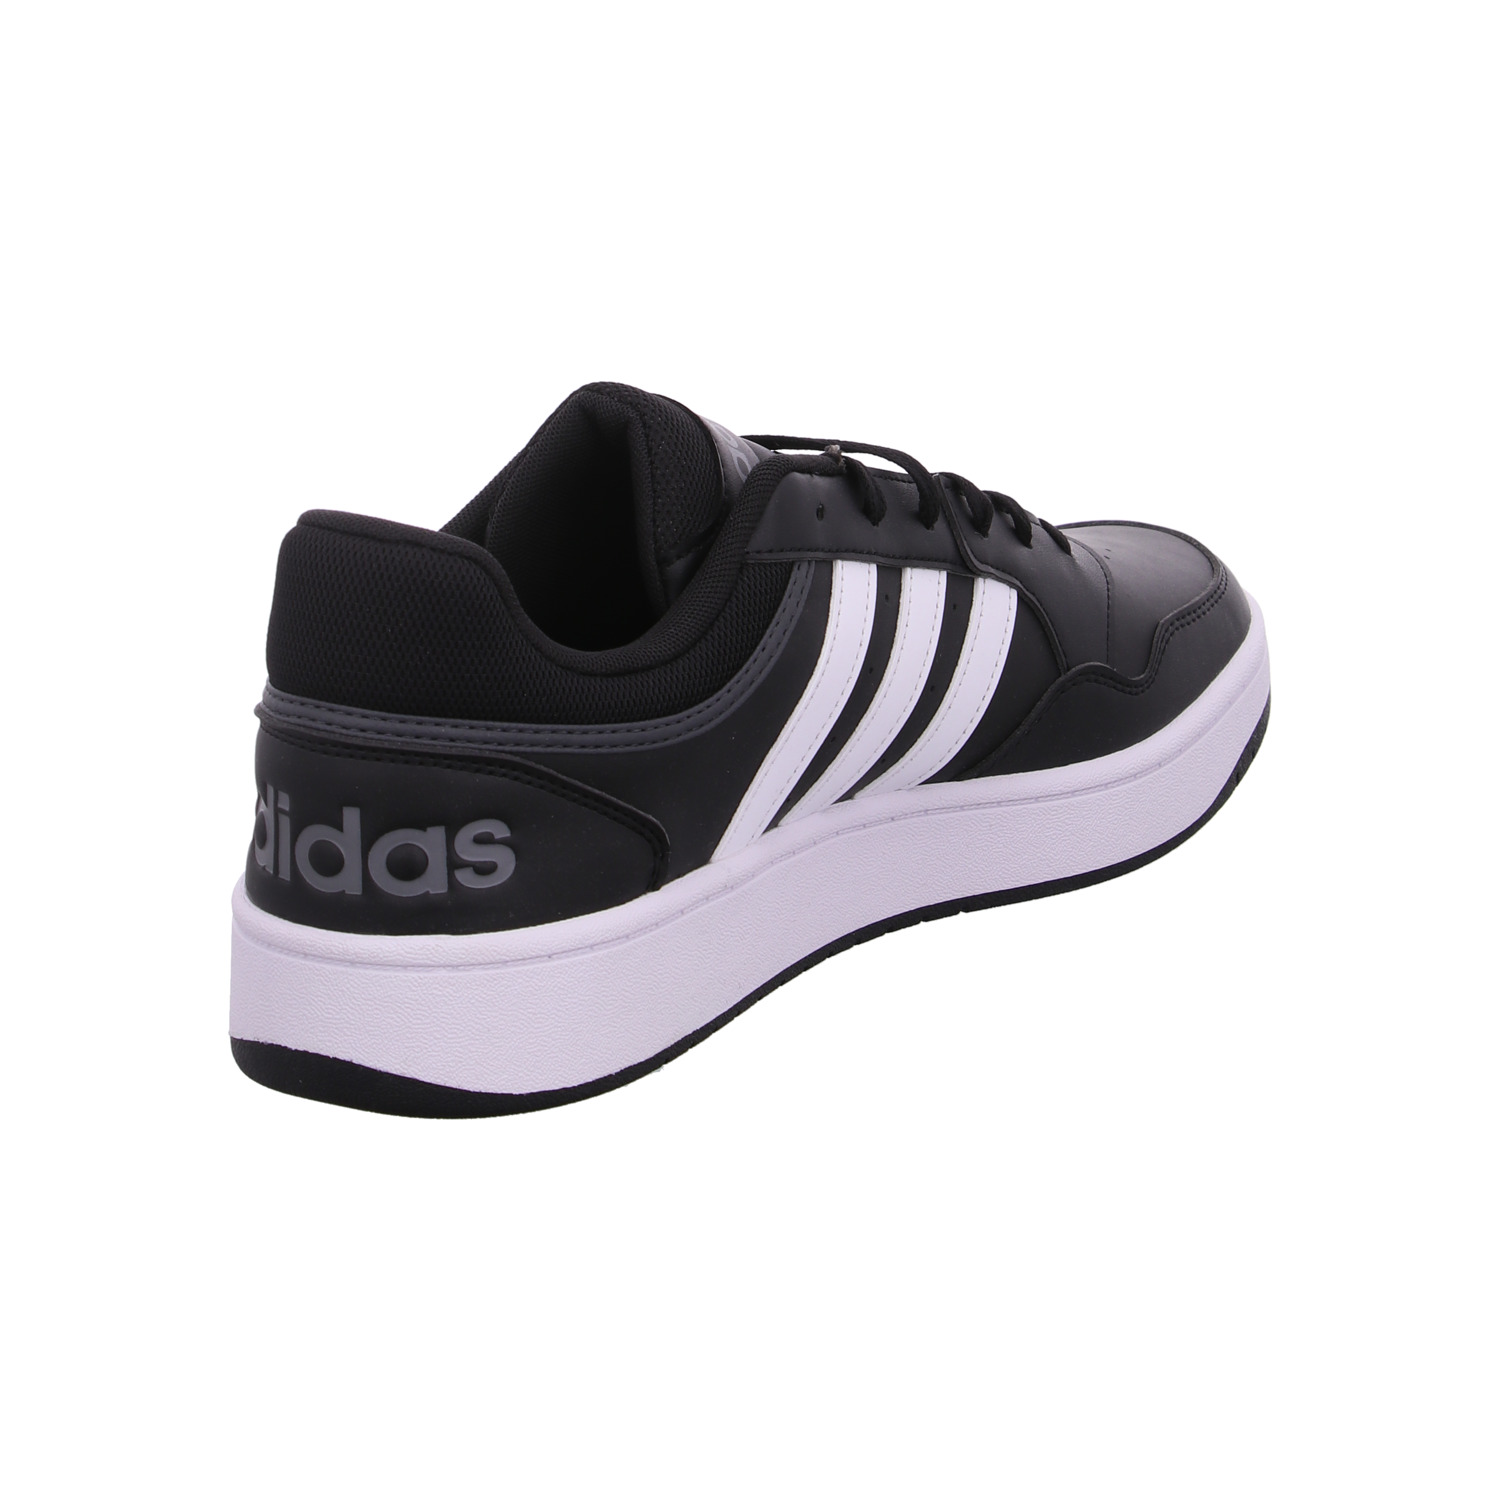 adidas-sneaker-schwarz_123895-11